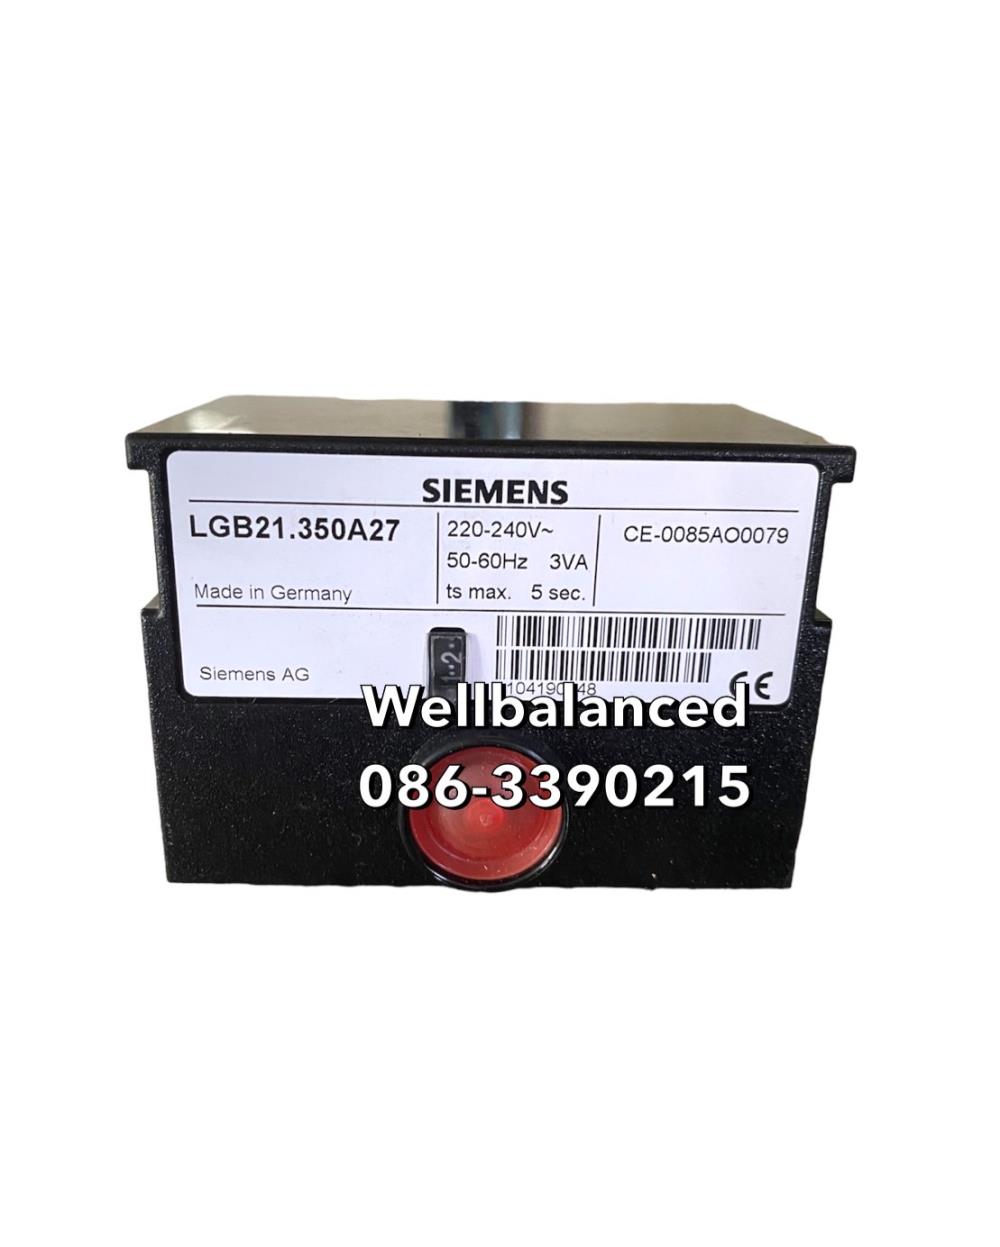 " SIEMENS" Burner Controller LGB21.350A27," SIEMENS" Burner Controller LGB21.350A27," SIEMENS" Burner Controller LGB21.350A27,Machinery and Process Equipment/Burners